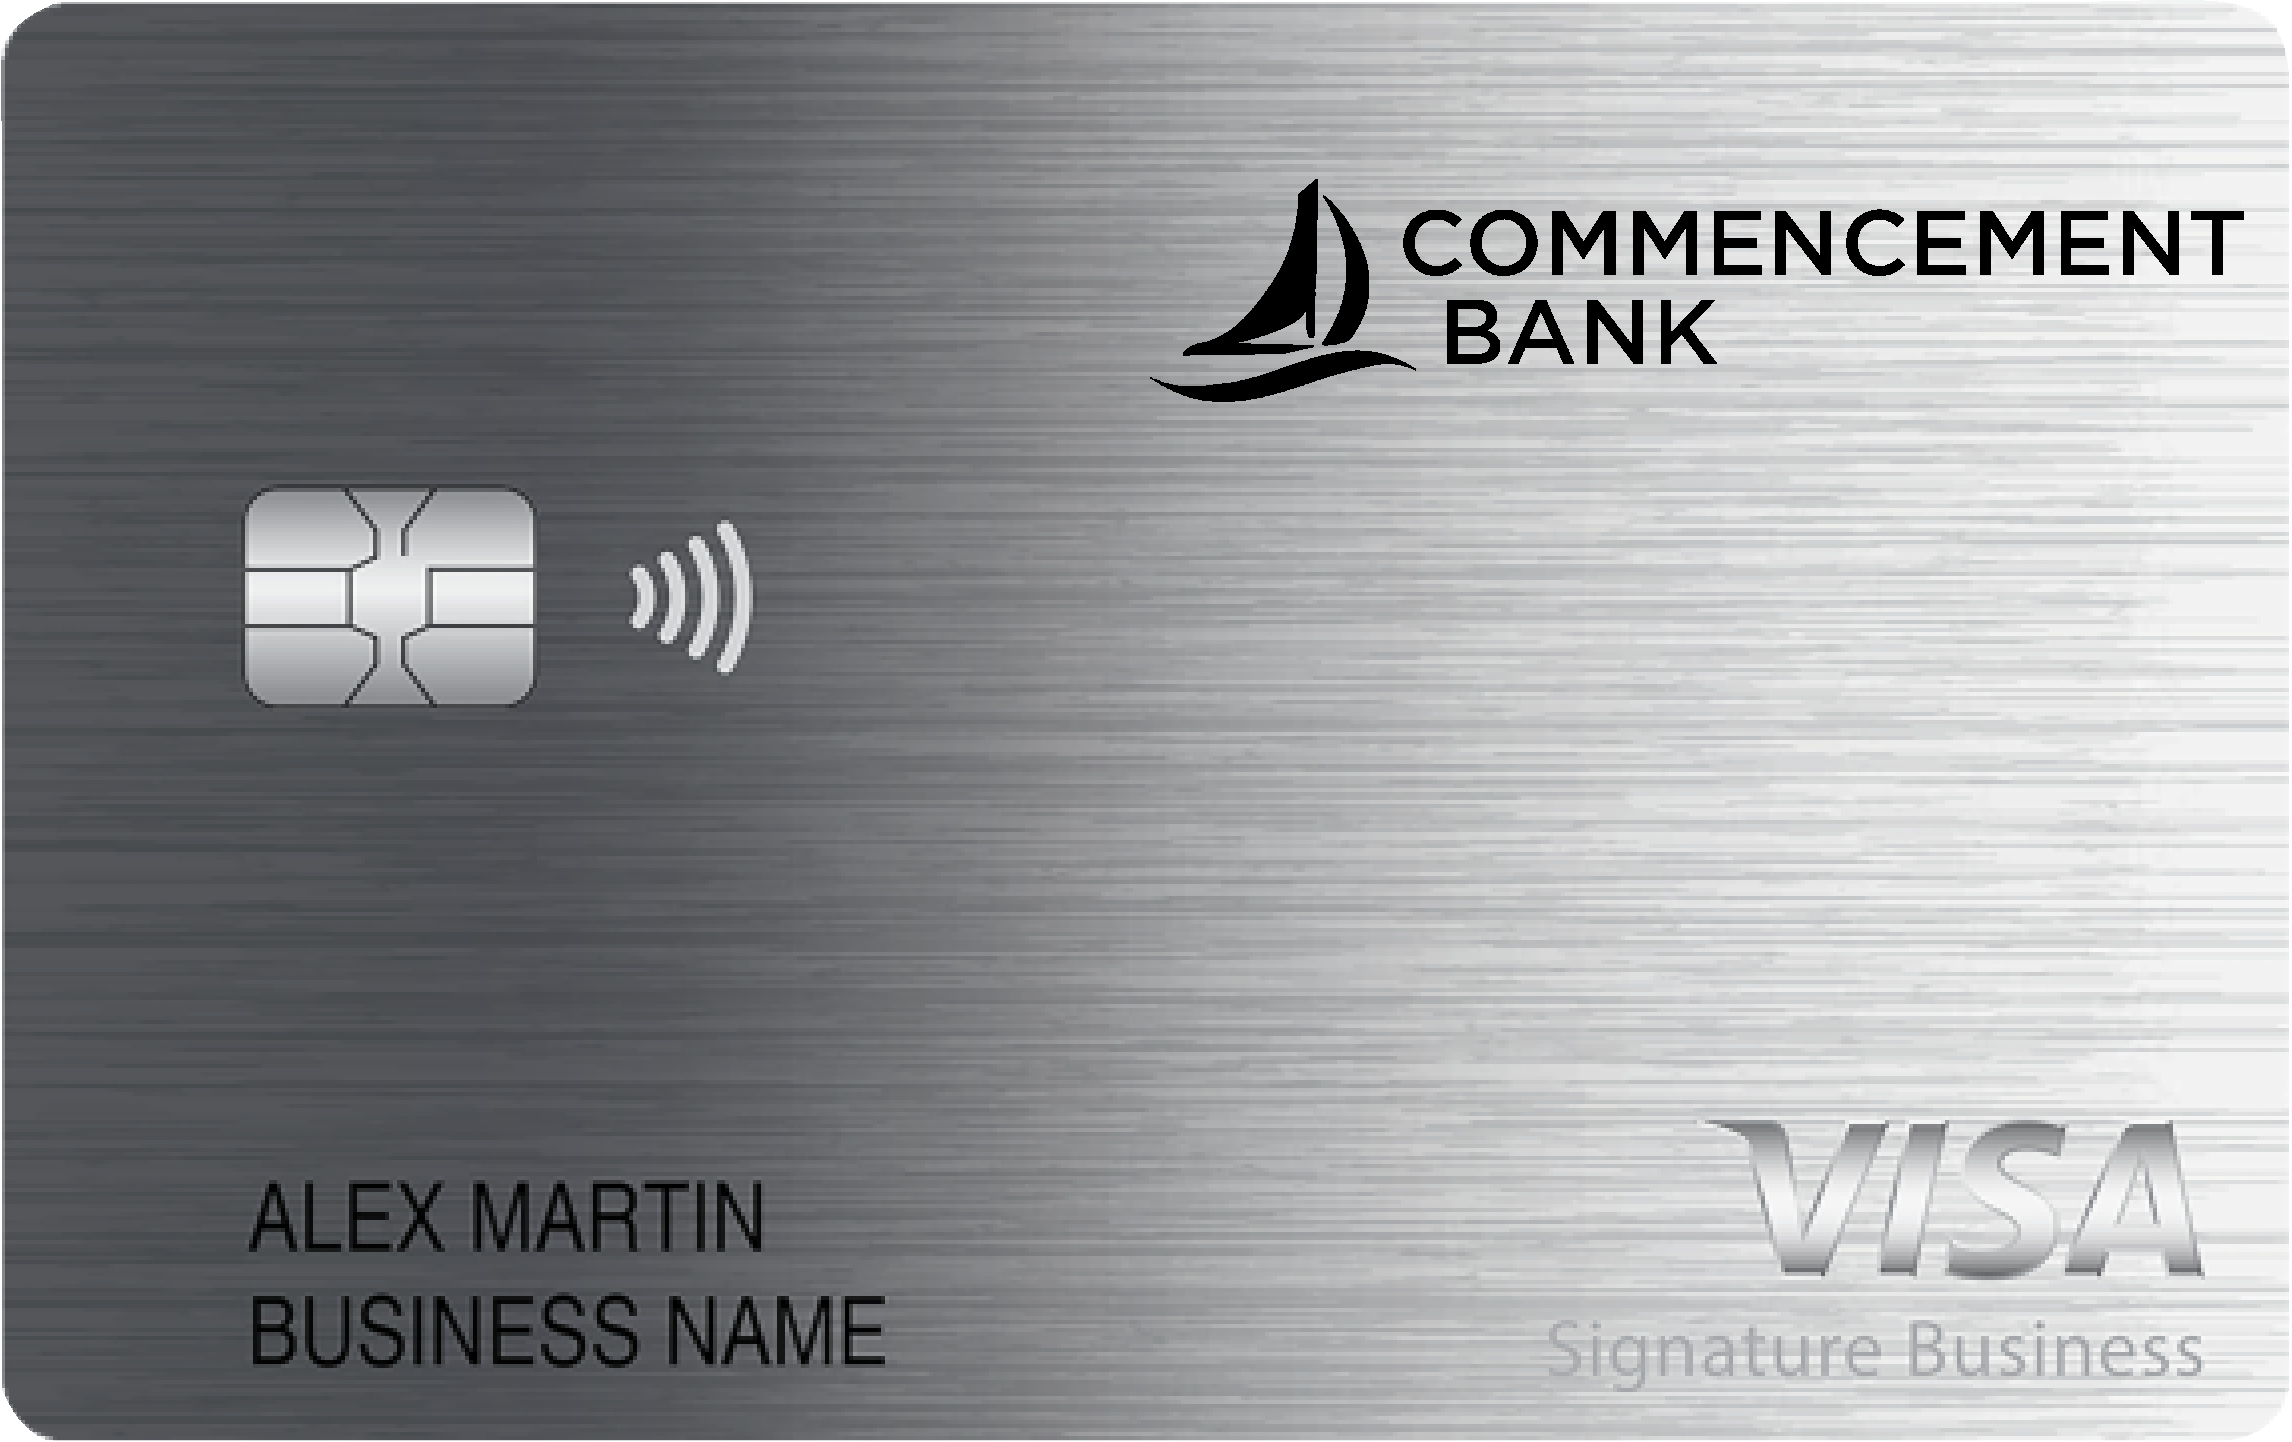 Commencement Bank Smart Business Rewards Card